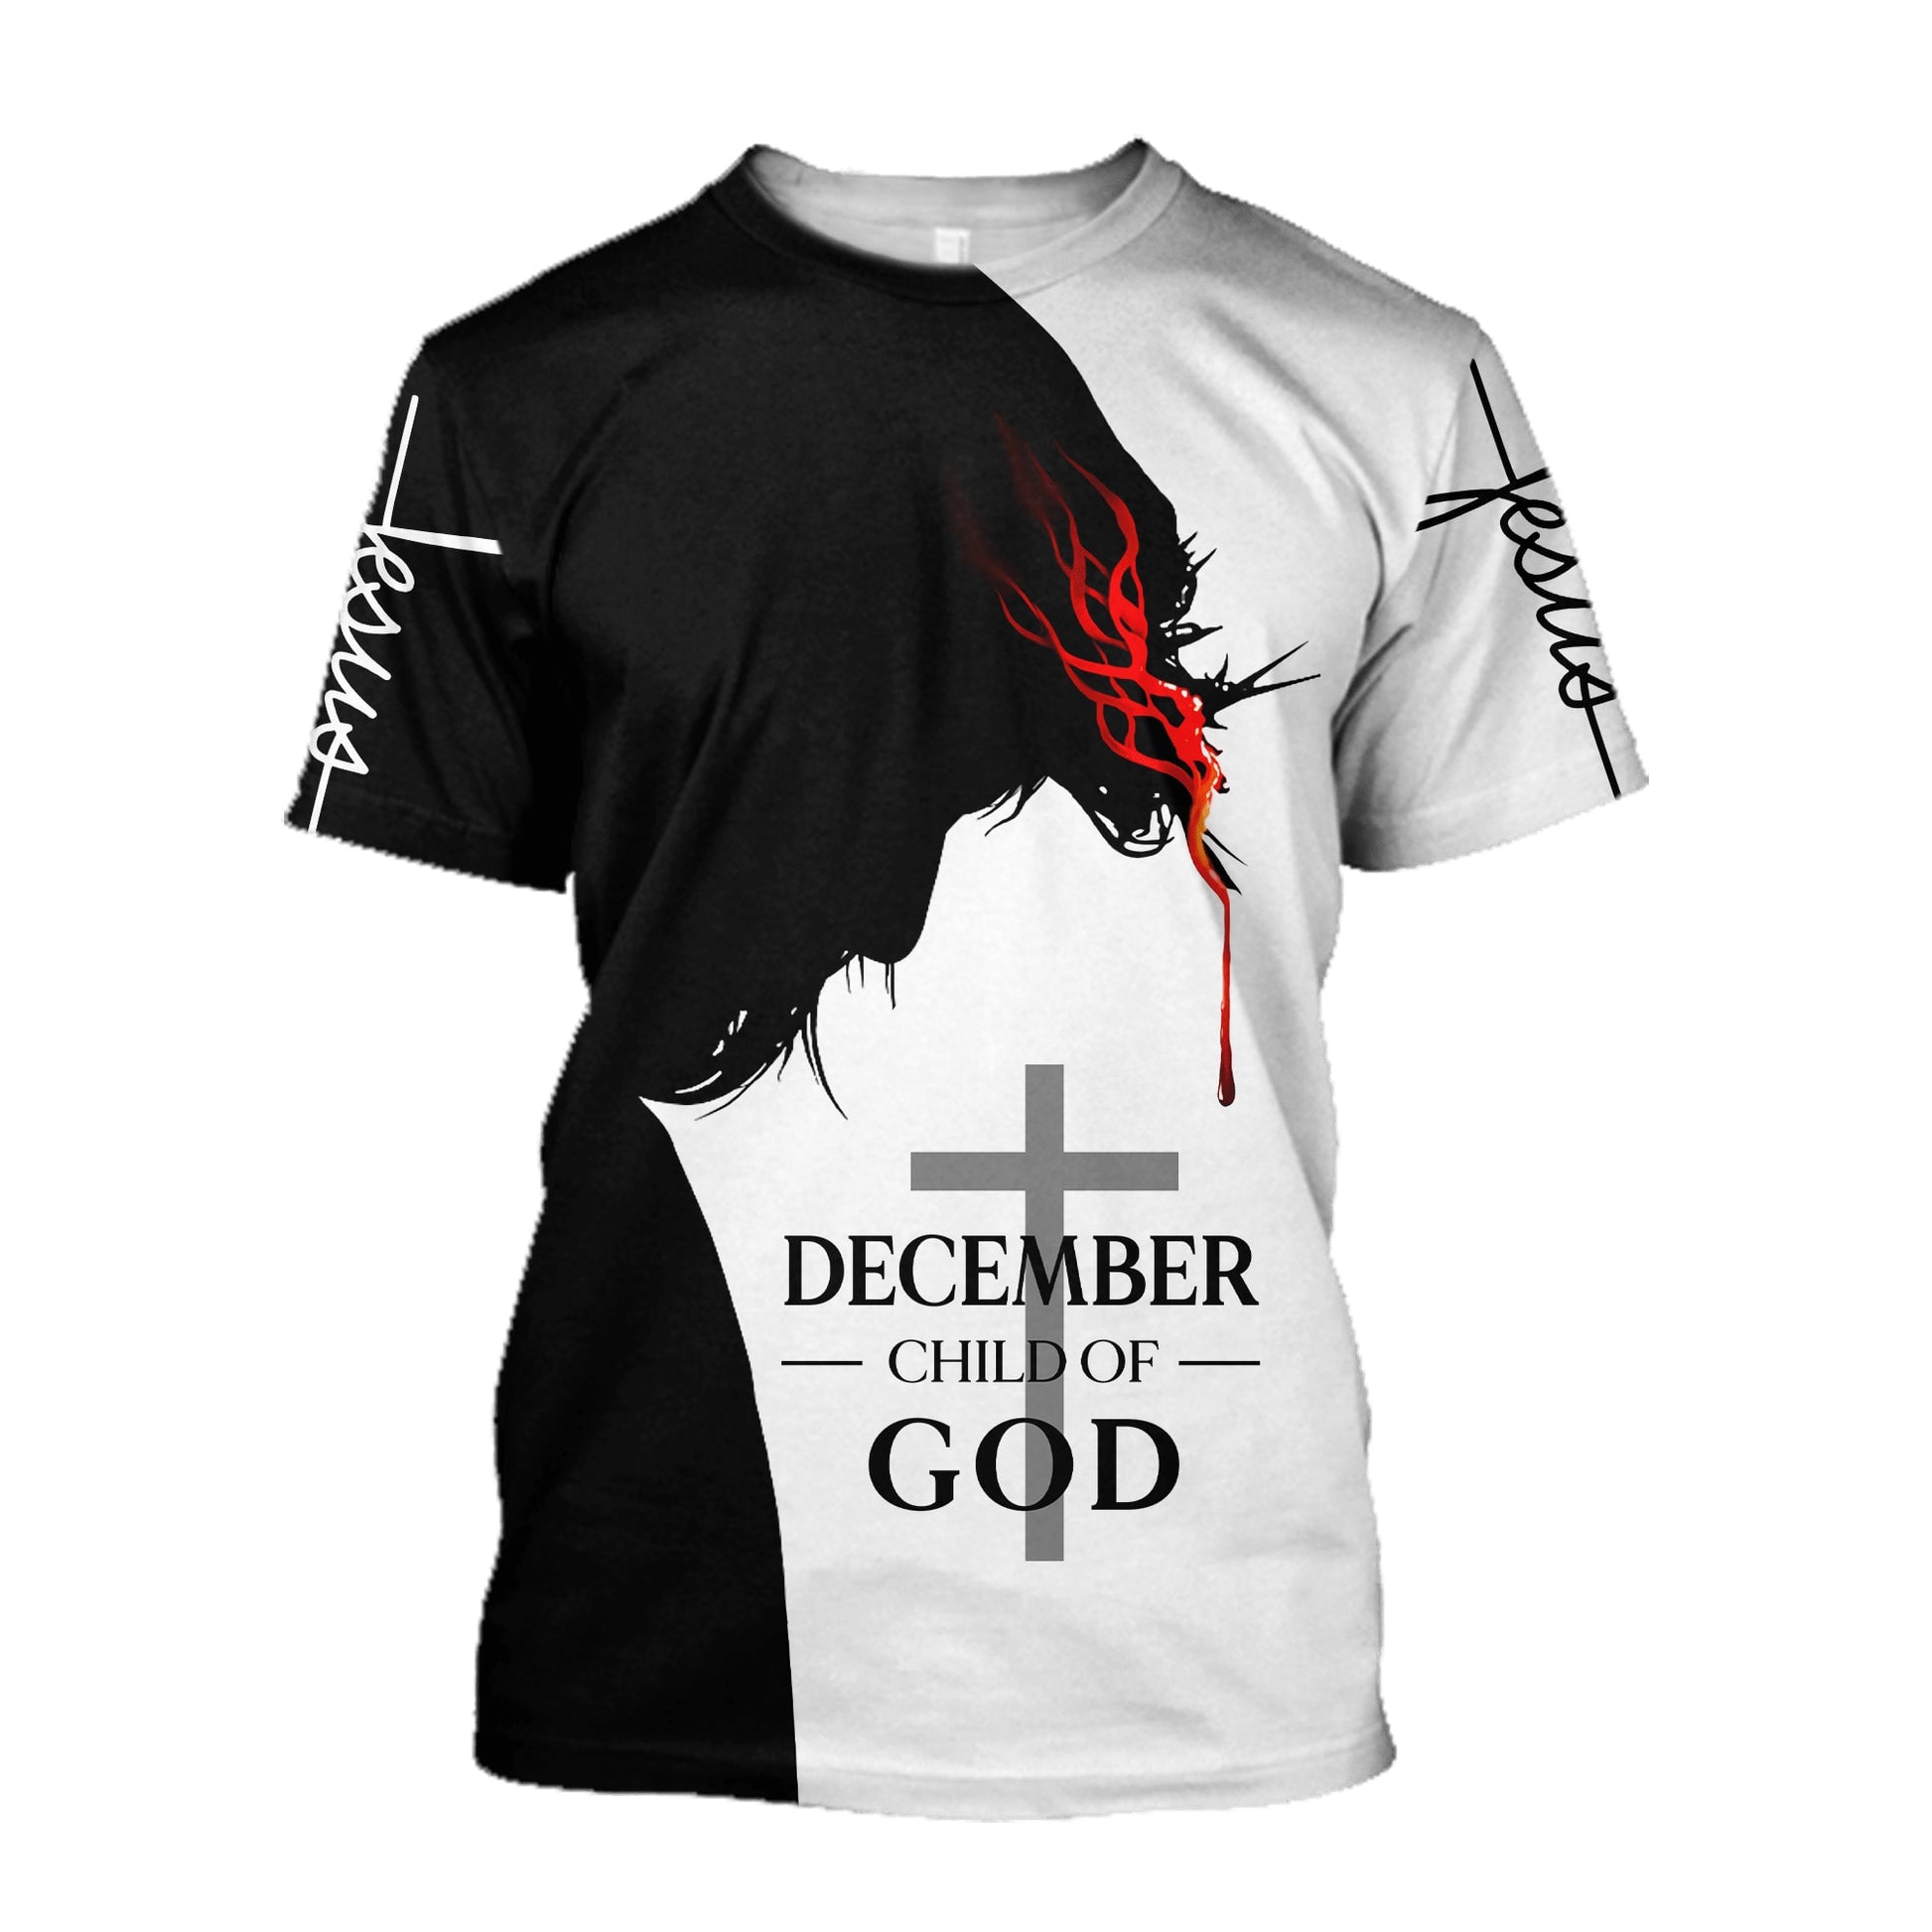 December Child Of God Balck And White Color Jesus Unisex Shirts - Christian 3d Shirts For Men Women